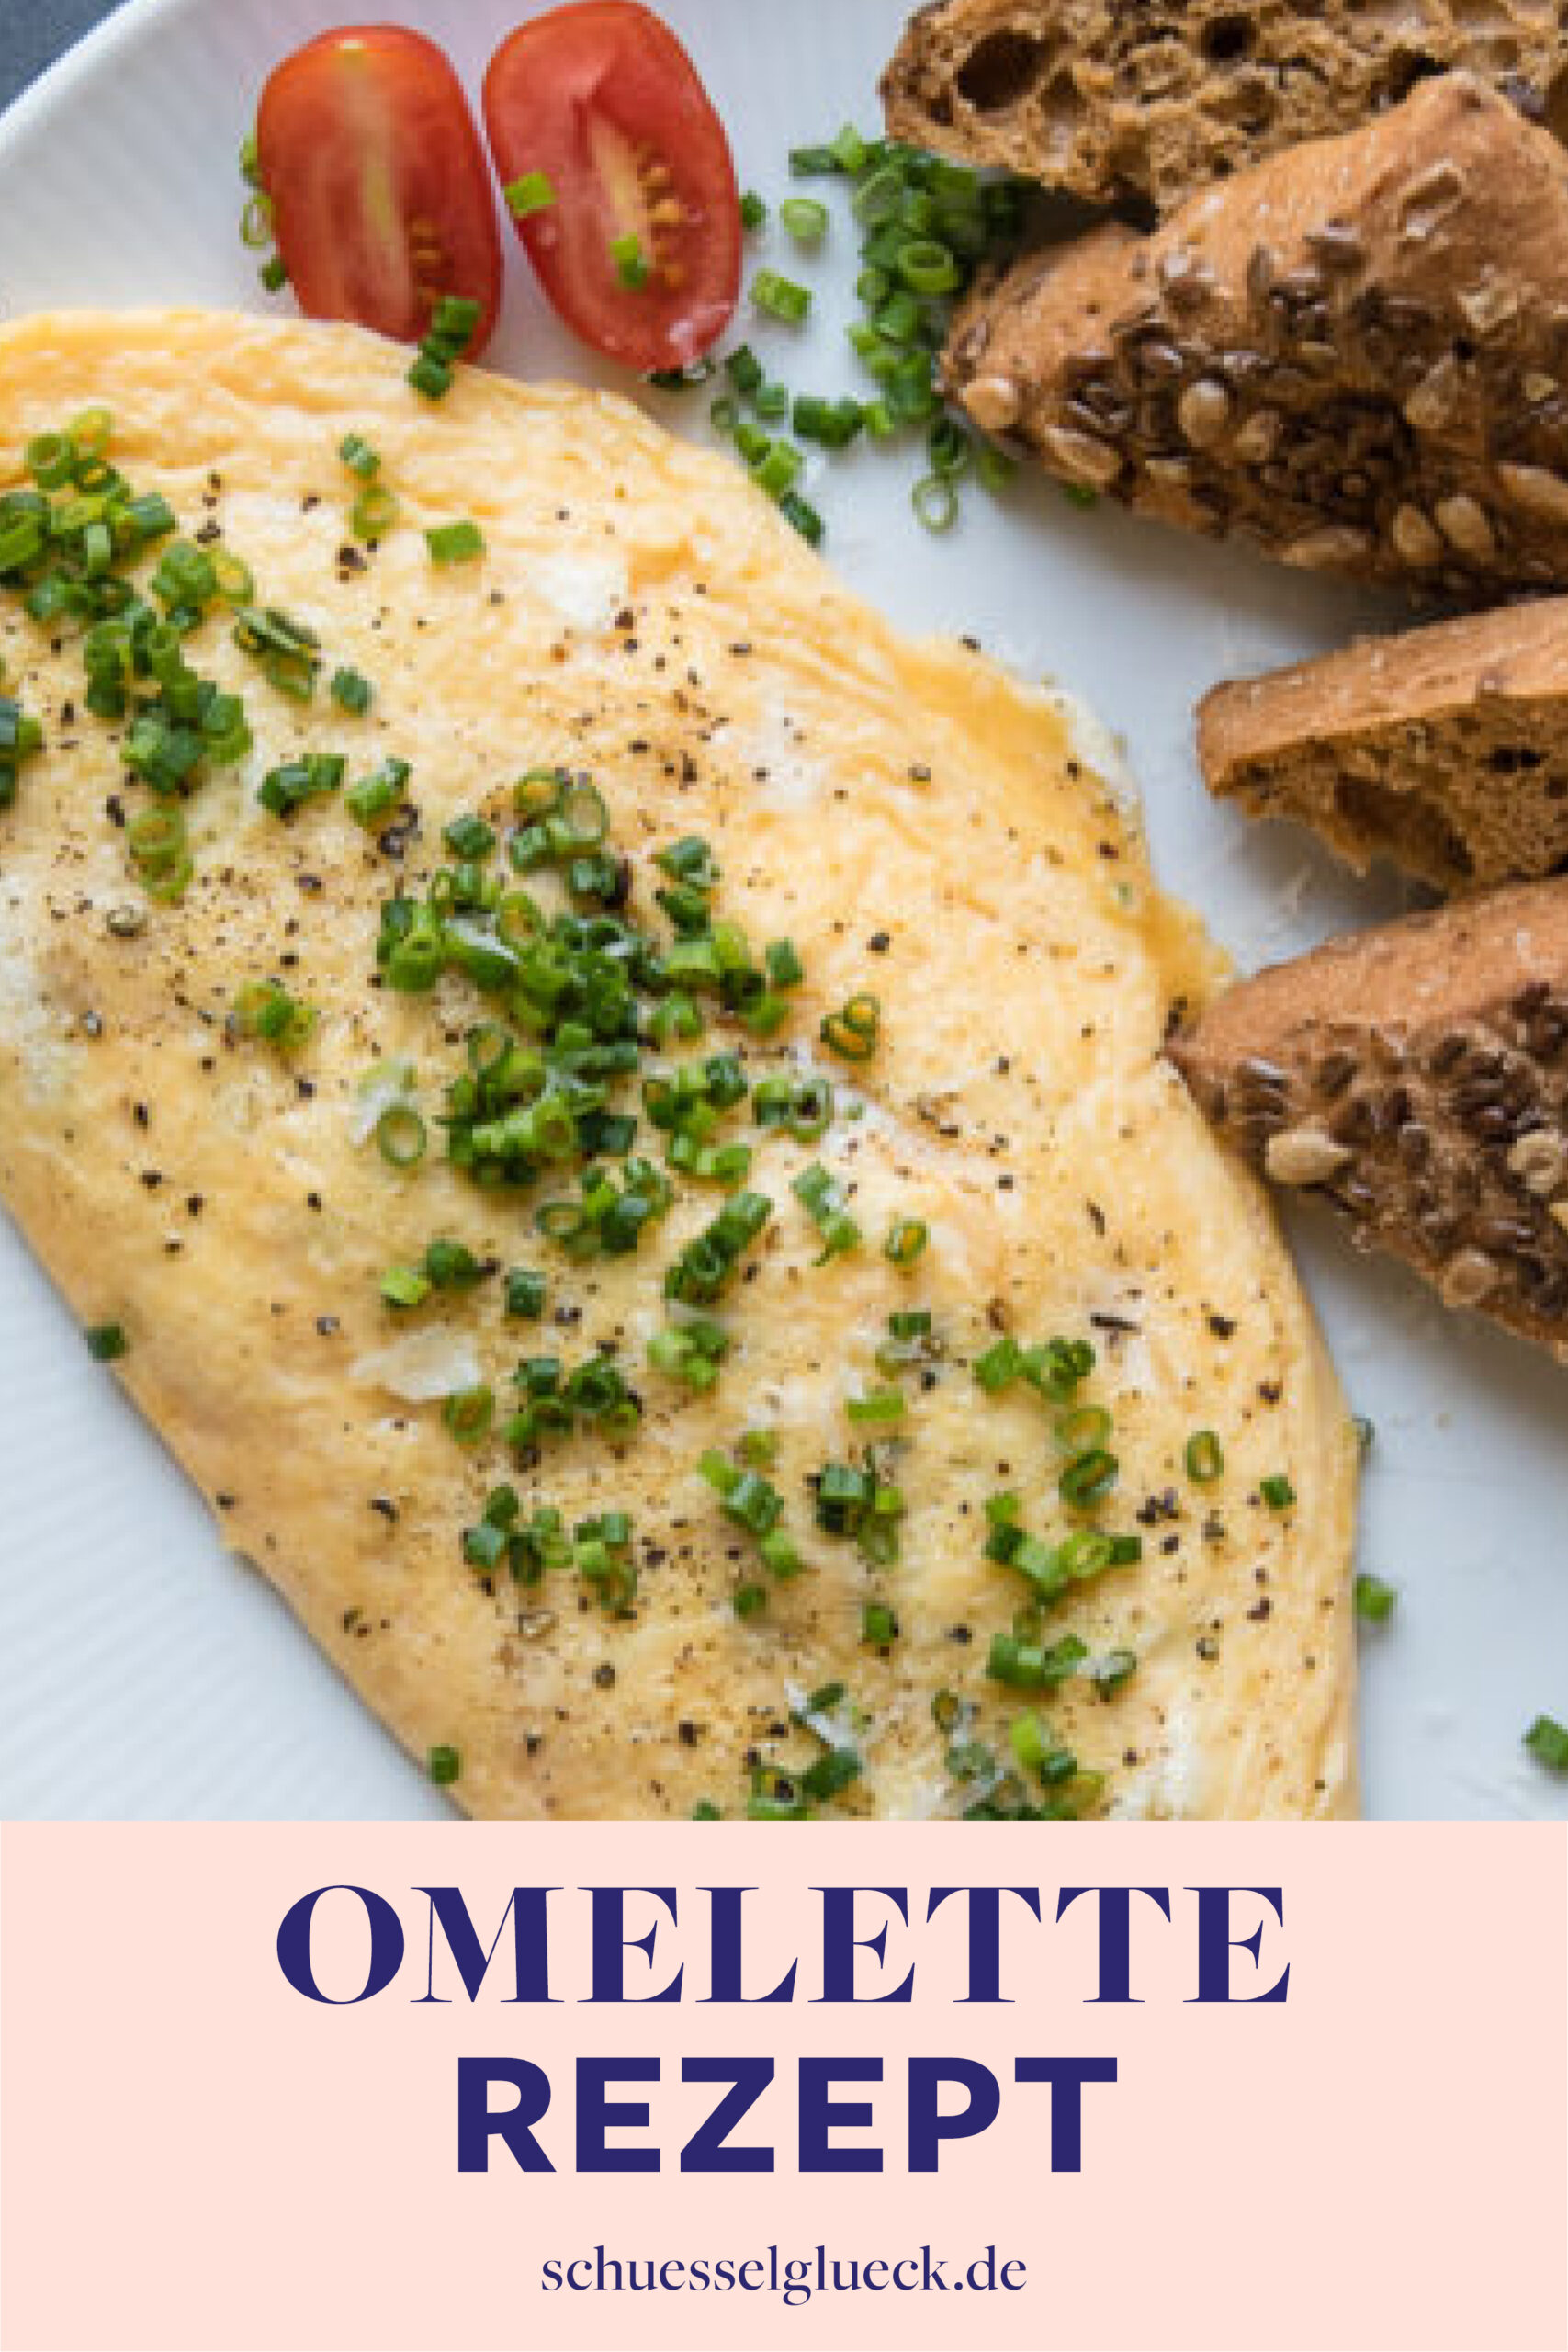 Perfektes Omelette selber machen – mit Schritt für Schritt Anleitung